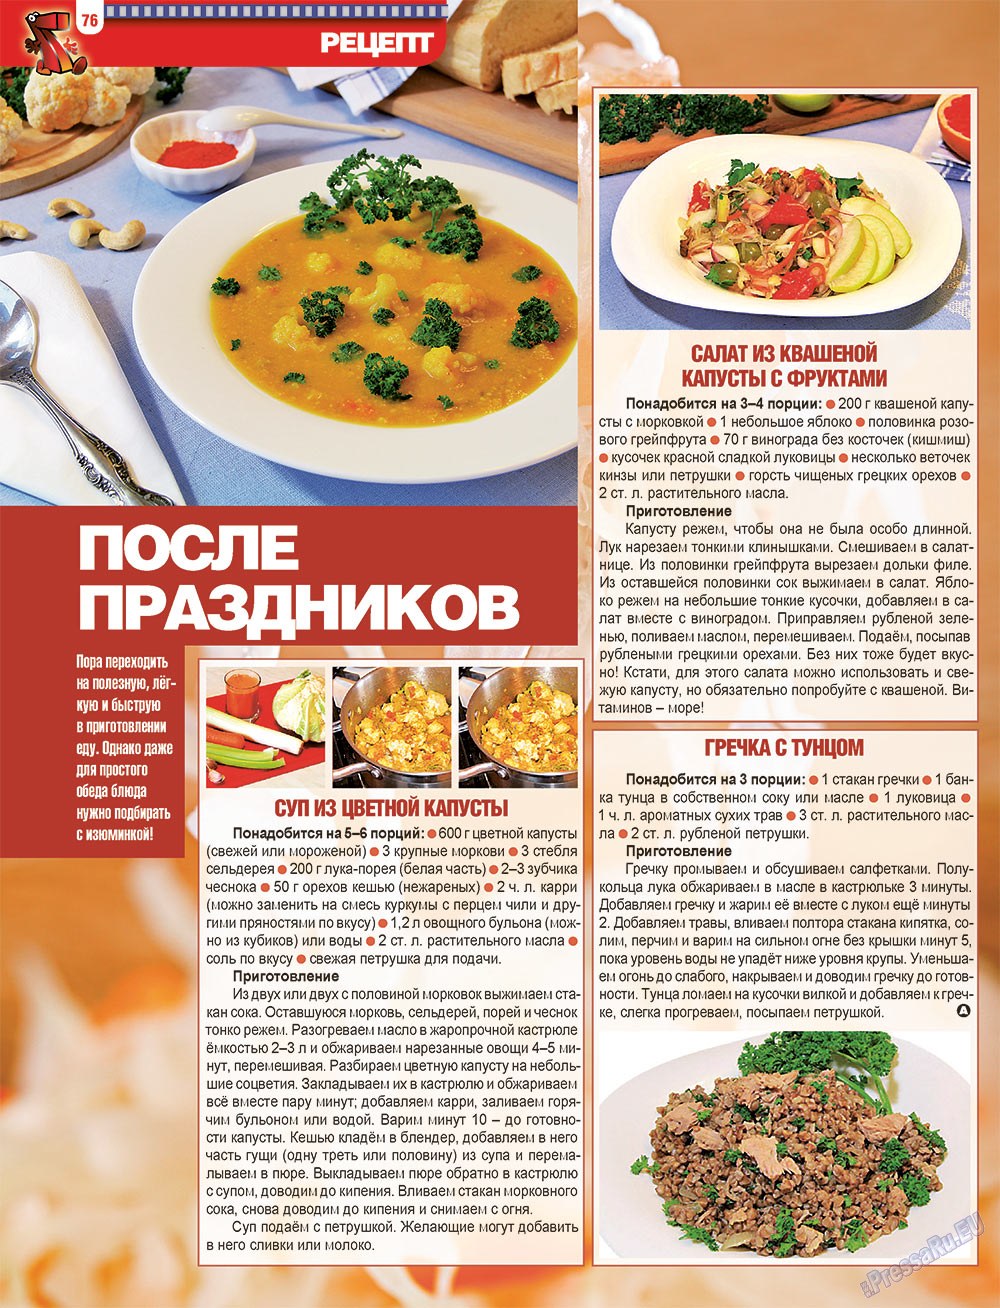 7плюс7я (журнал). 2013 год, номер 3, стр. 76